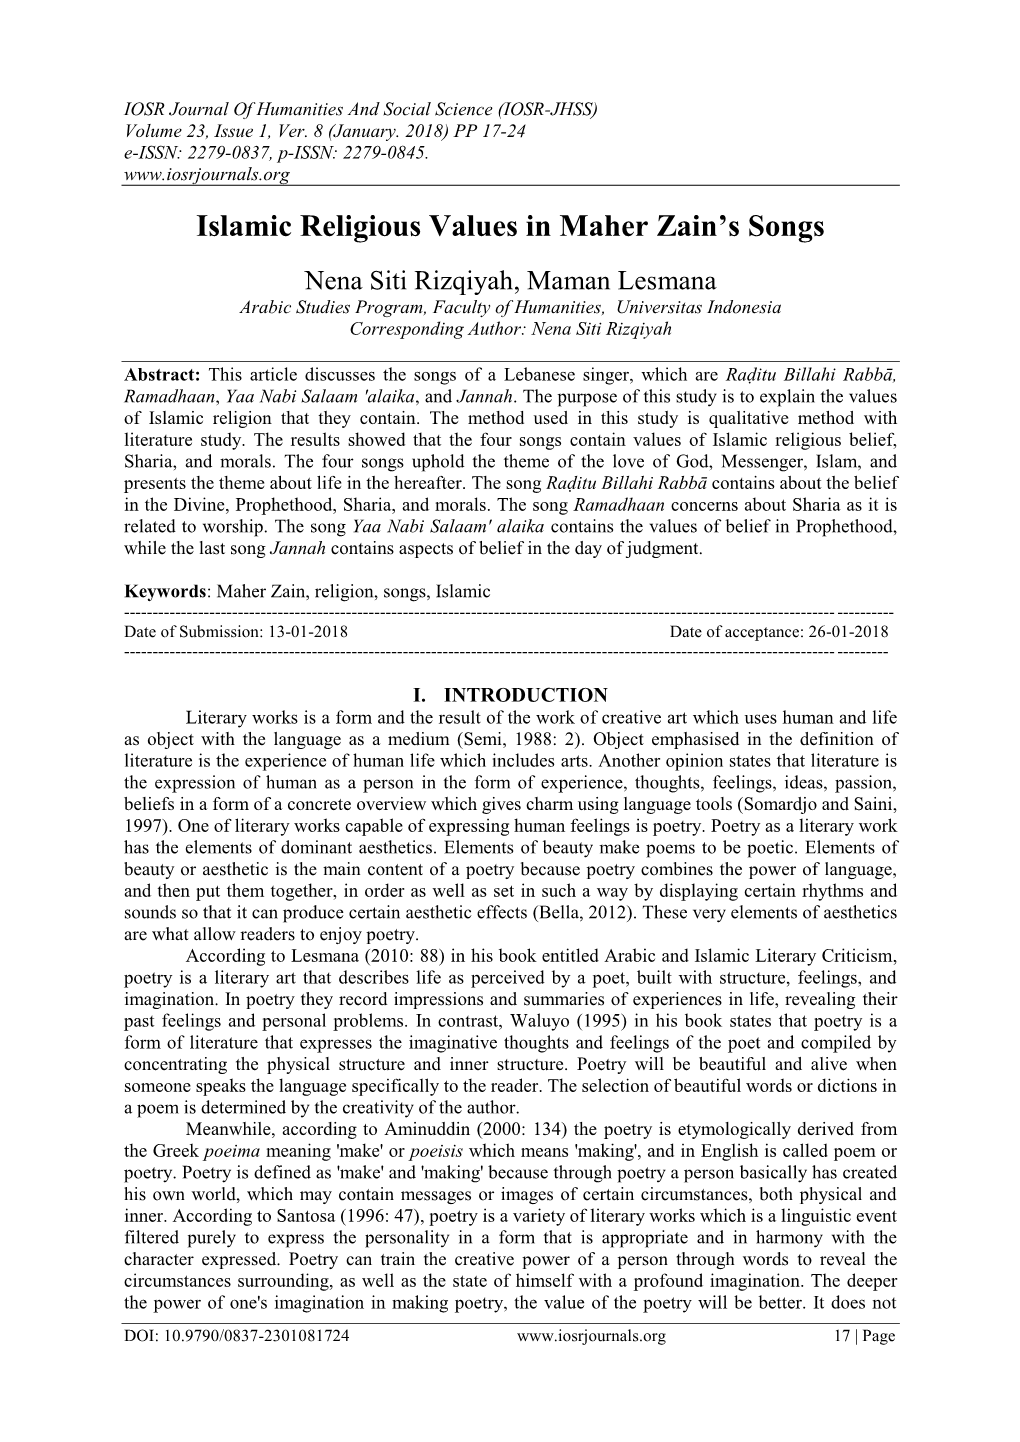 Islamic Religious Values in Maher Zain's Songs